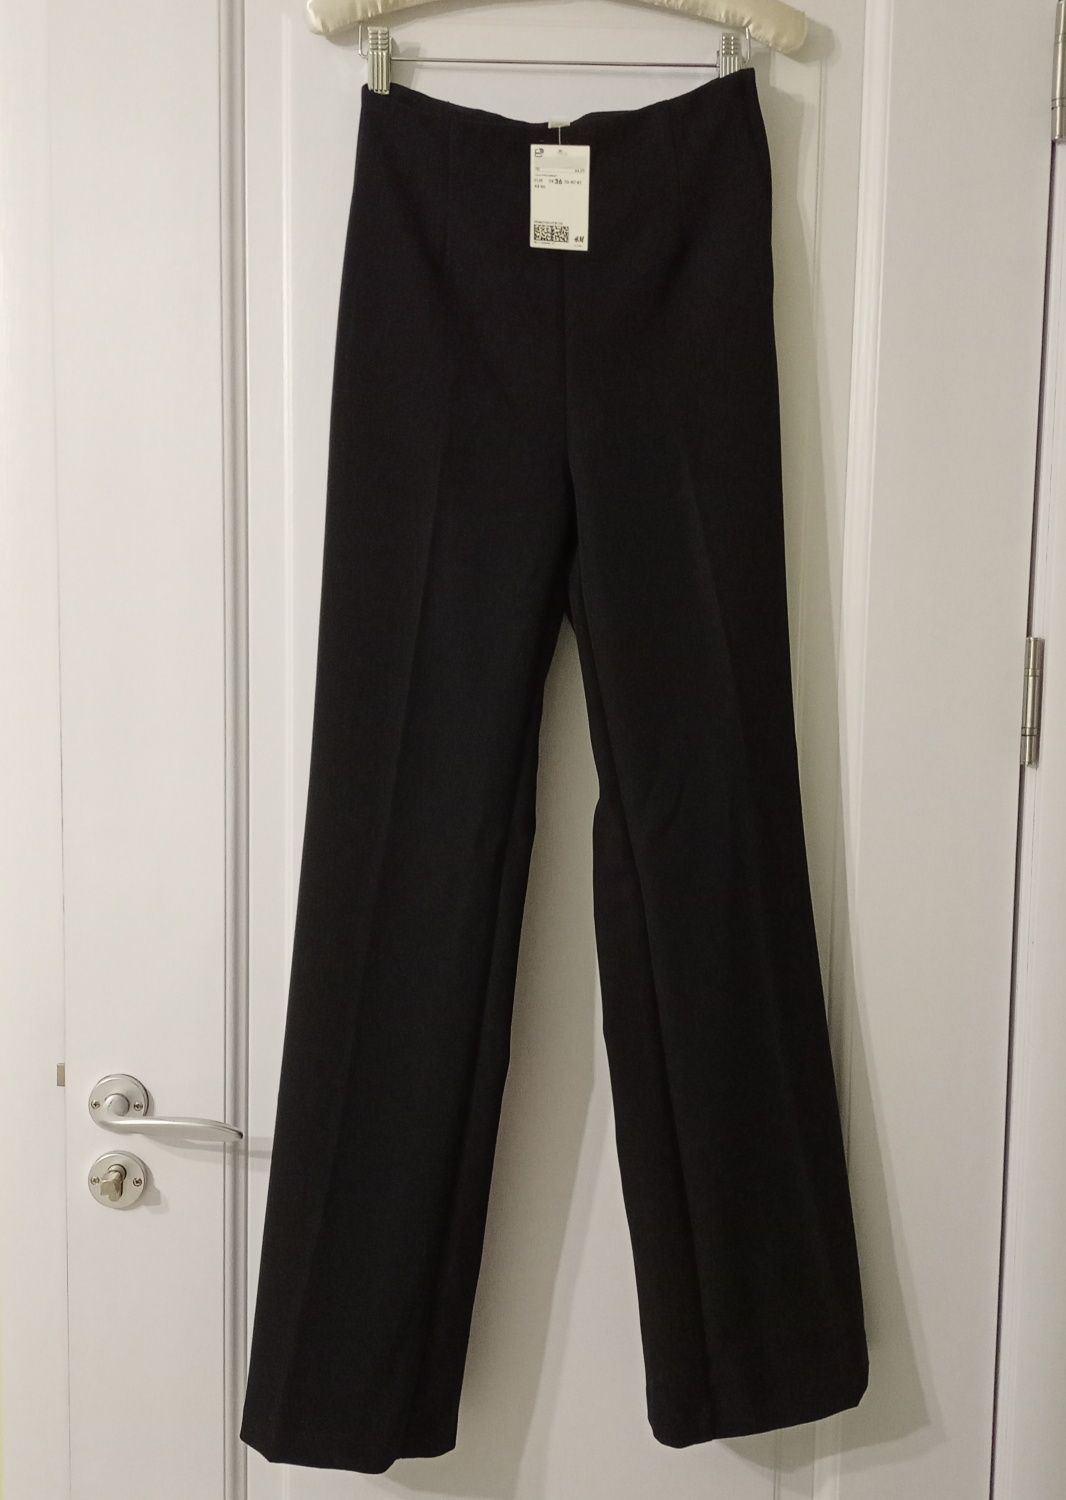 Нов черен панталон H&М, размер 36